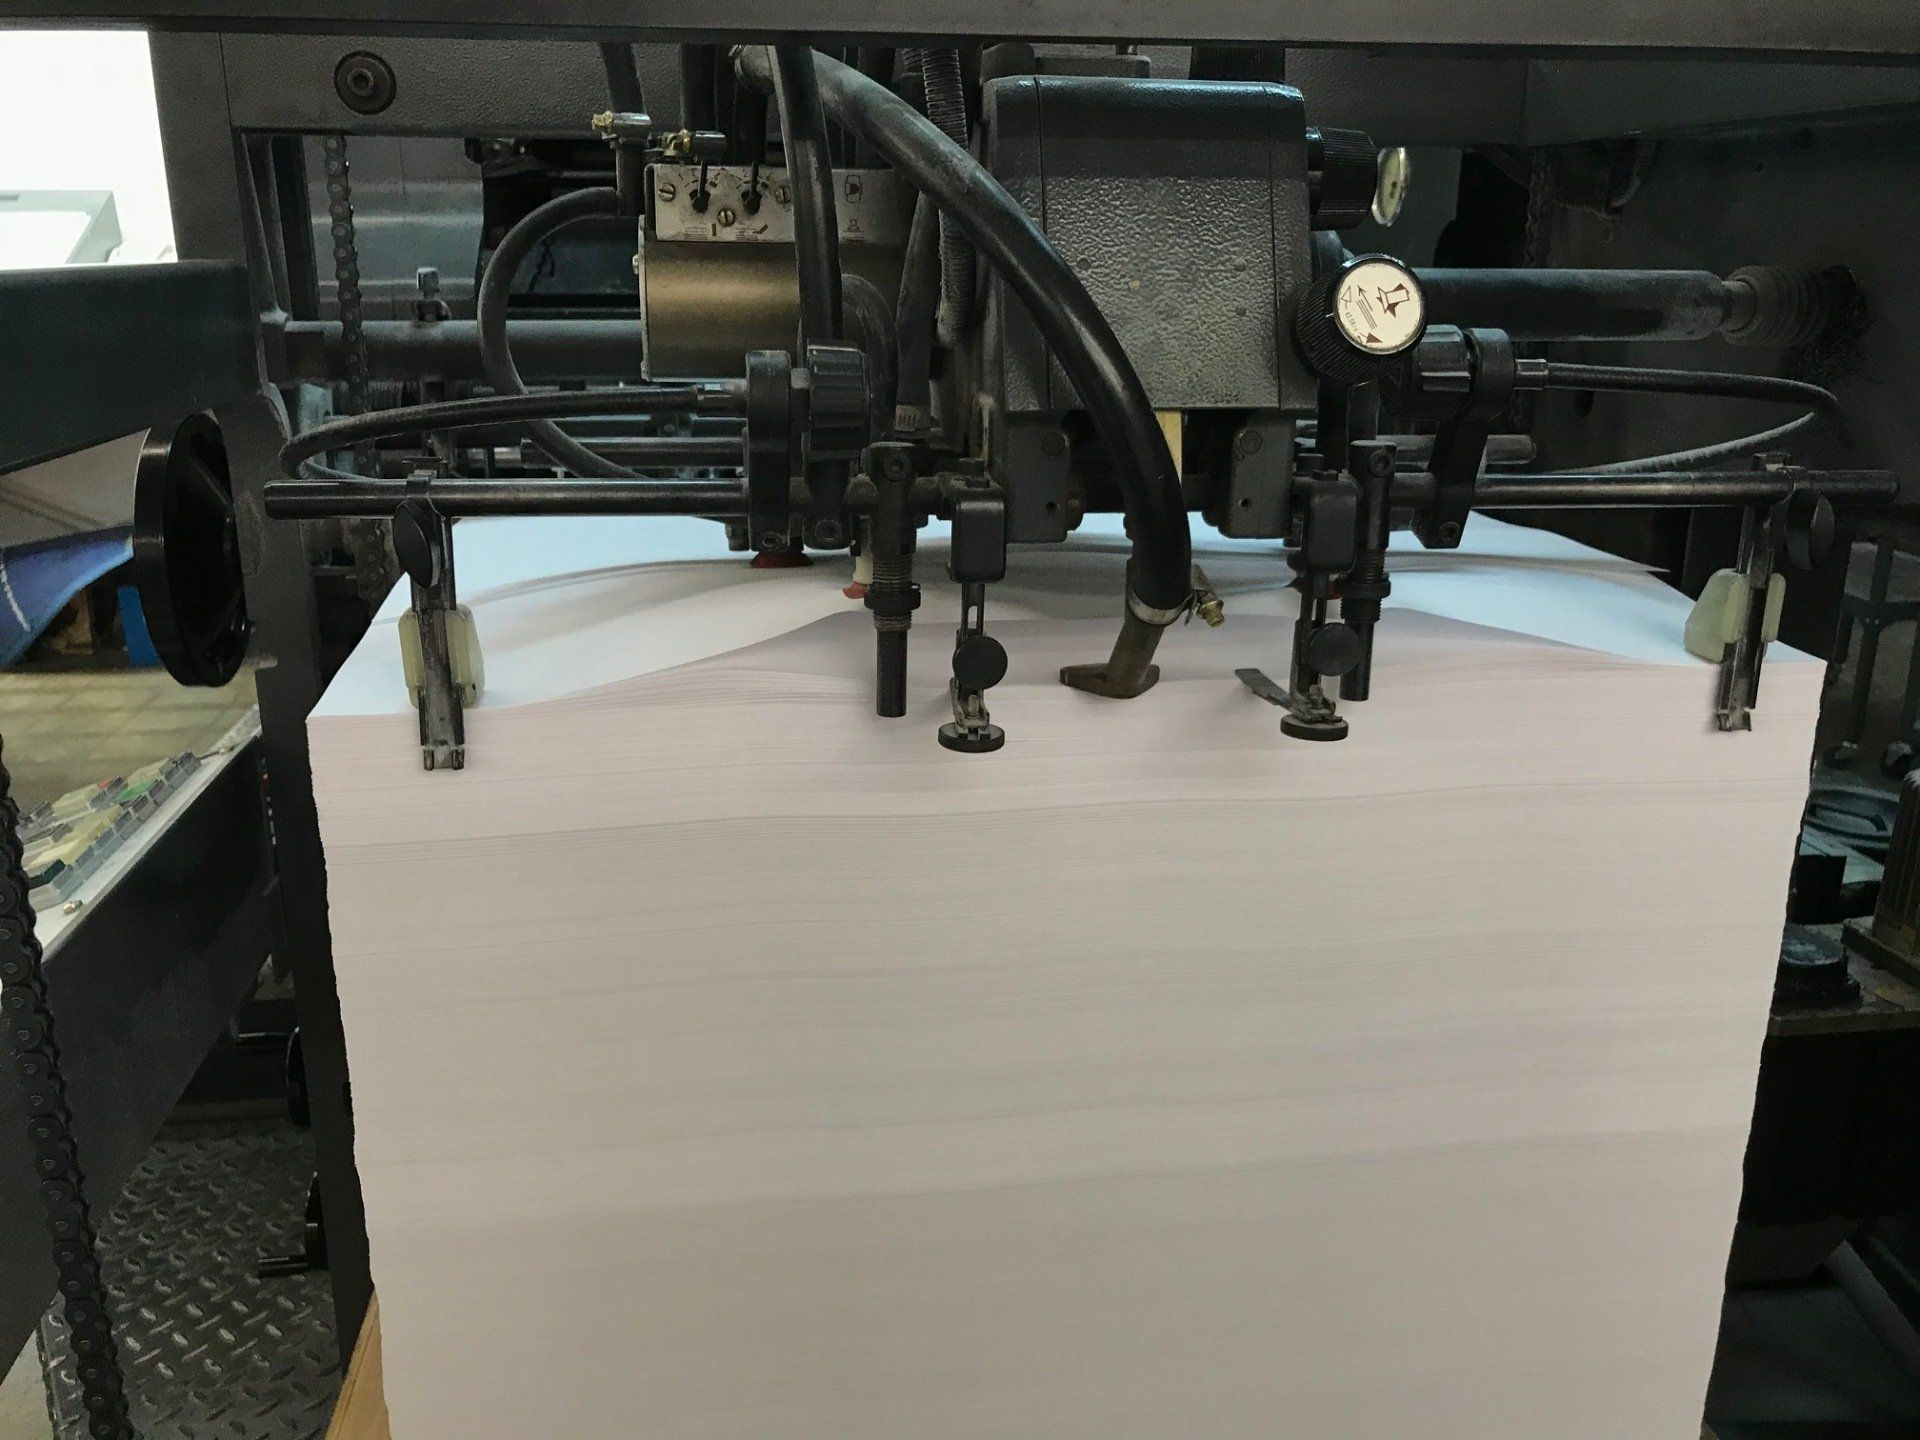 paper on printing press